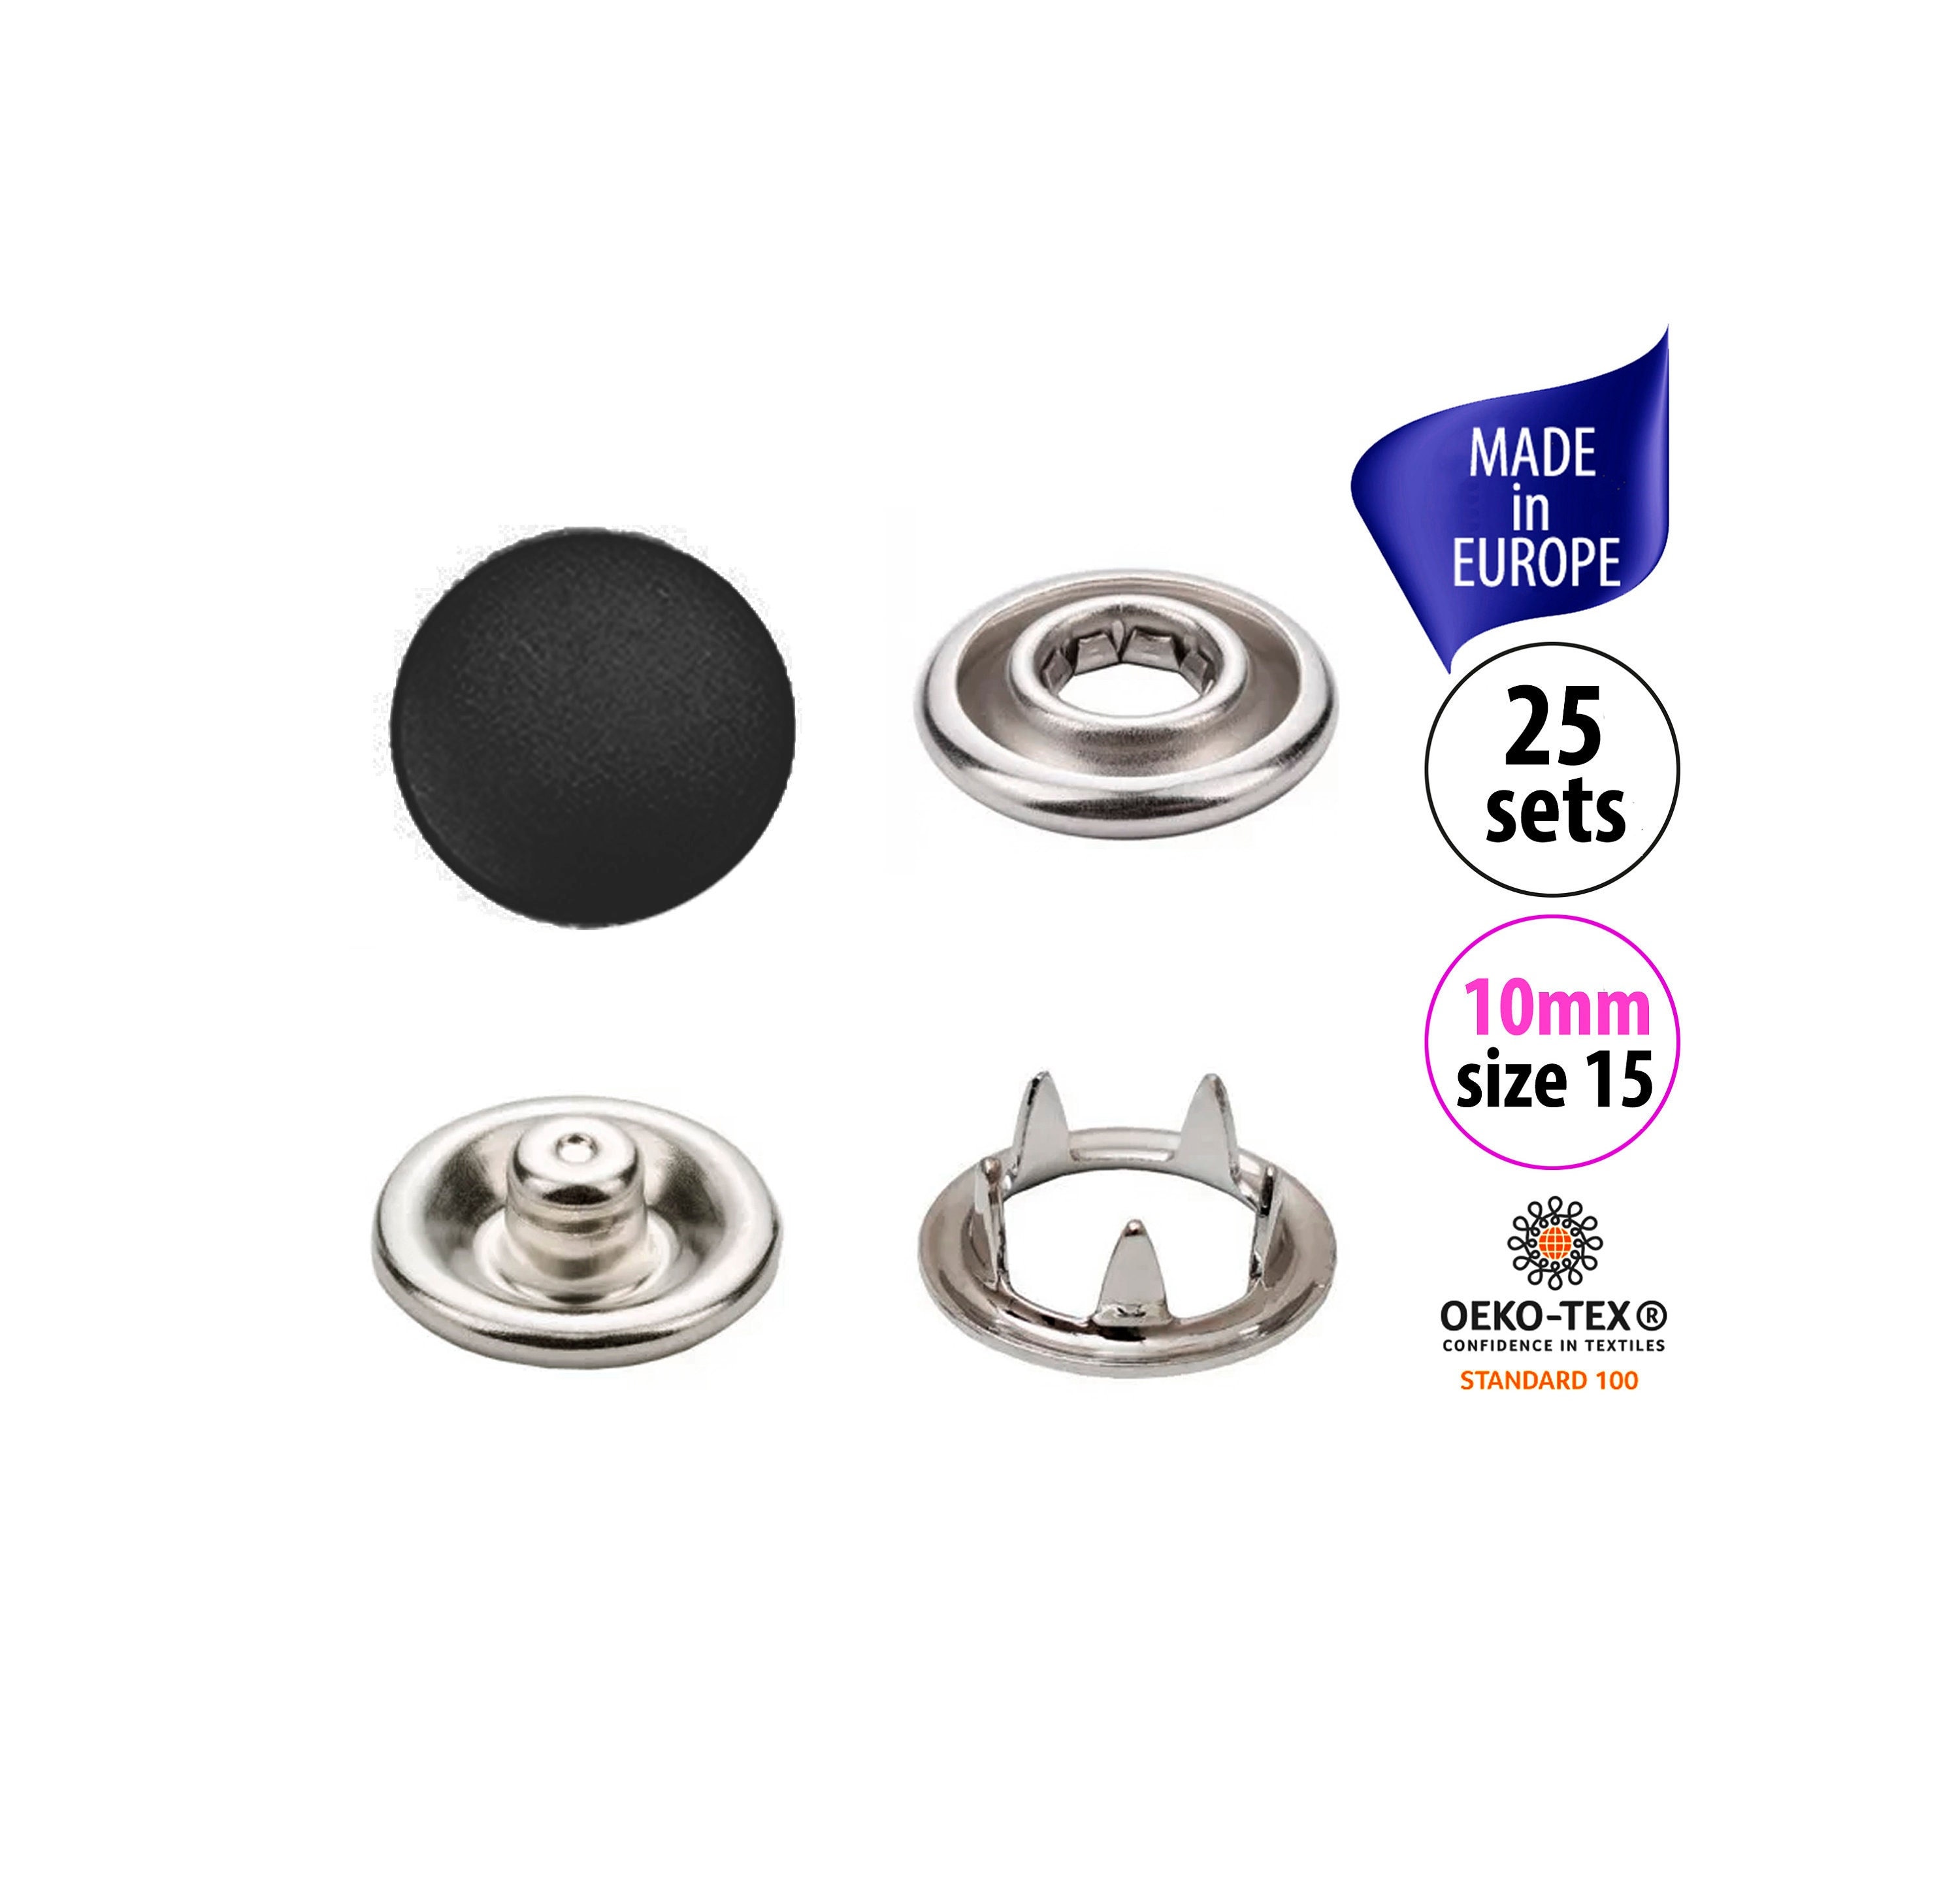 SN10B11 Snap Button, Cap 10mm, S-Spring Socket, Black Matte, Solid Brass (100 Sets per Bag)